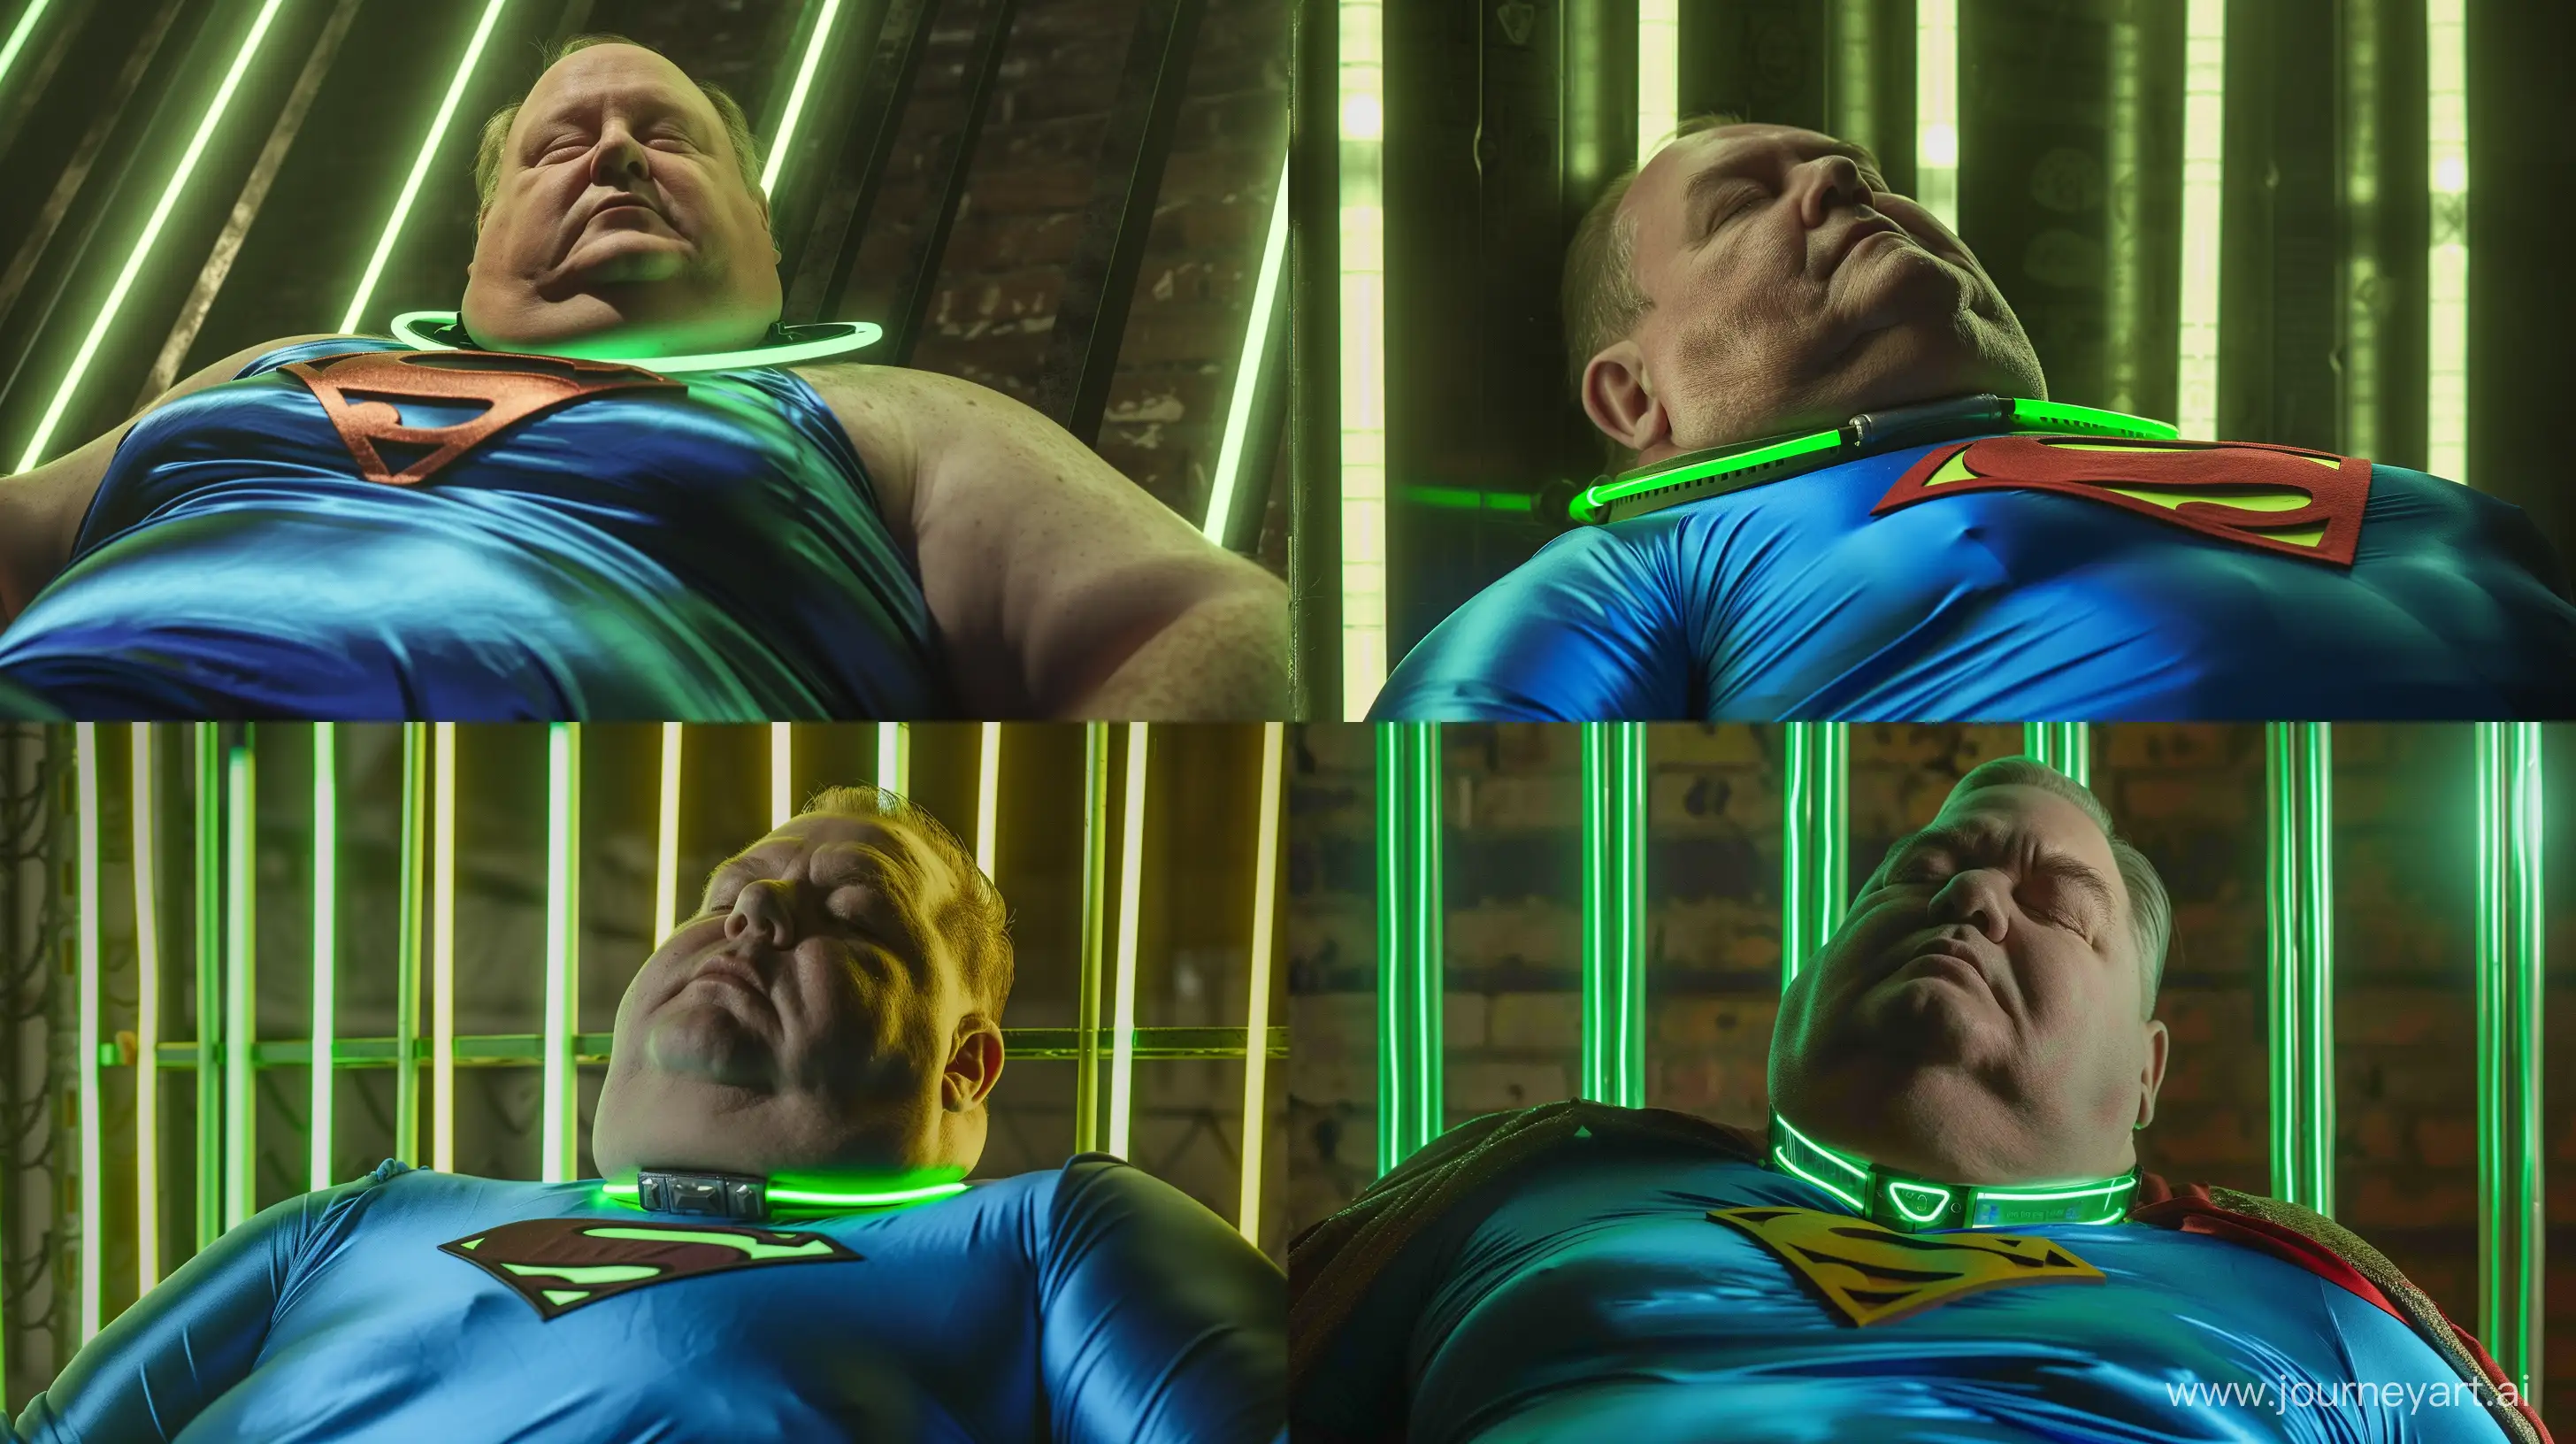 CloseUp-Portrait-of-a-Mature-Man-in-Vibrant-Superhero-Attire-Resting-Against-Glowing-Neon-Bars